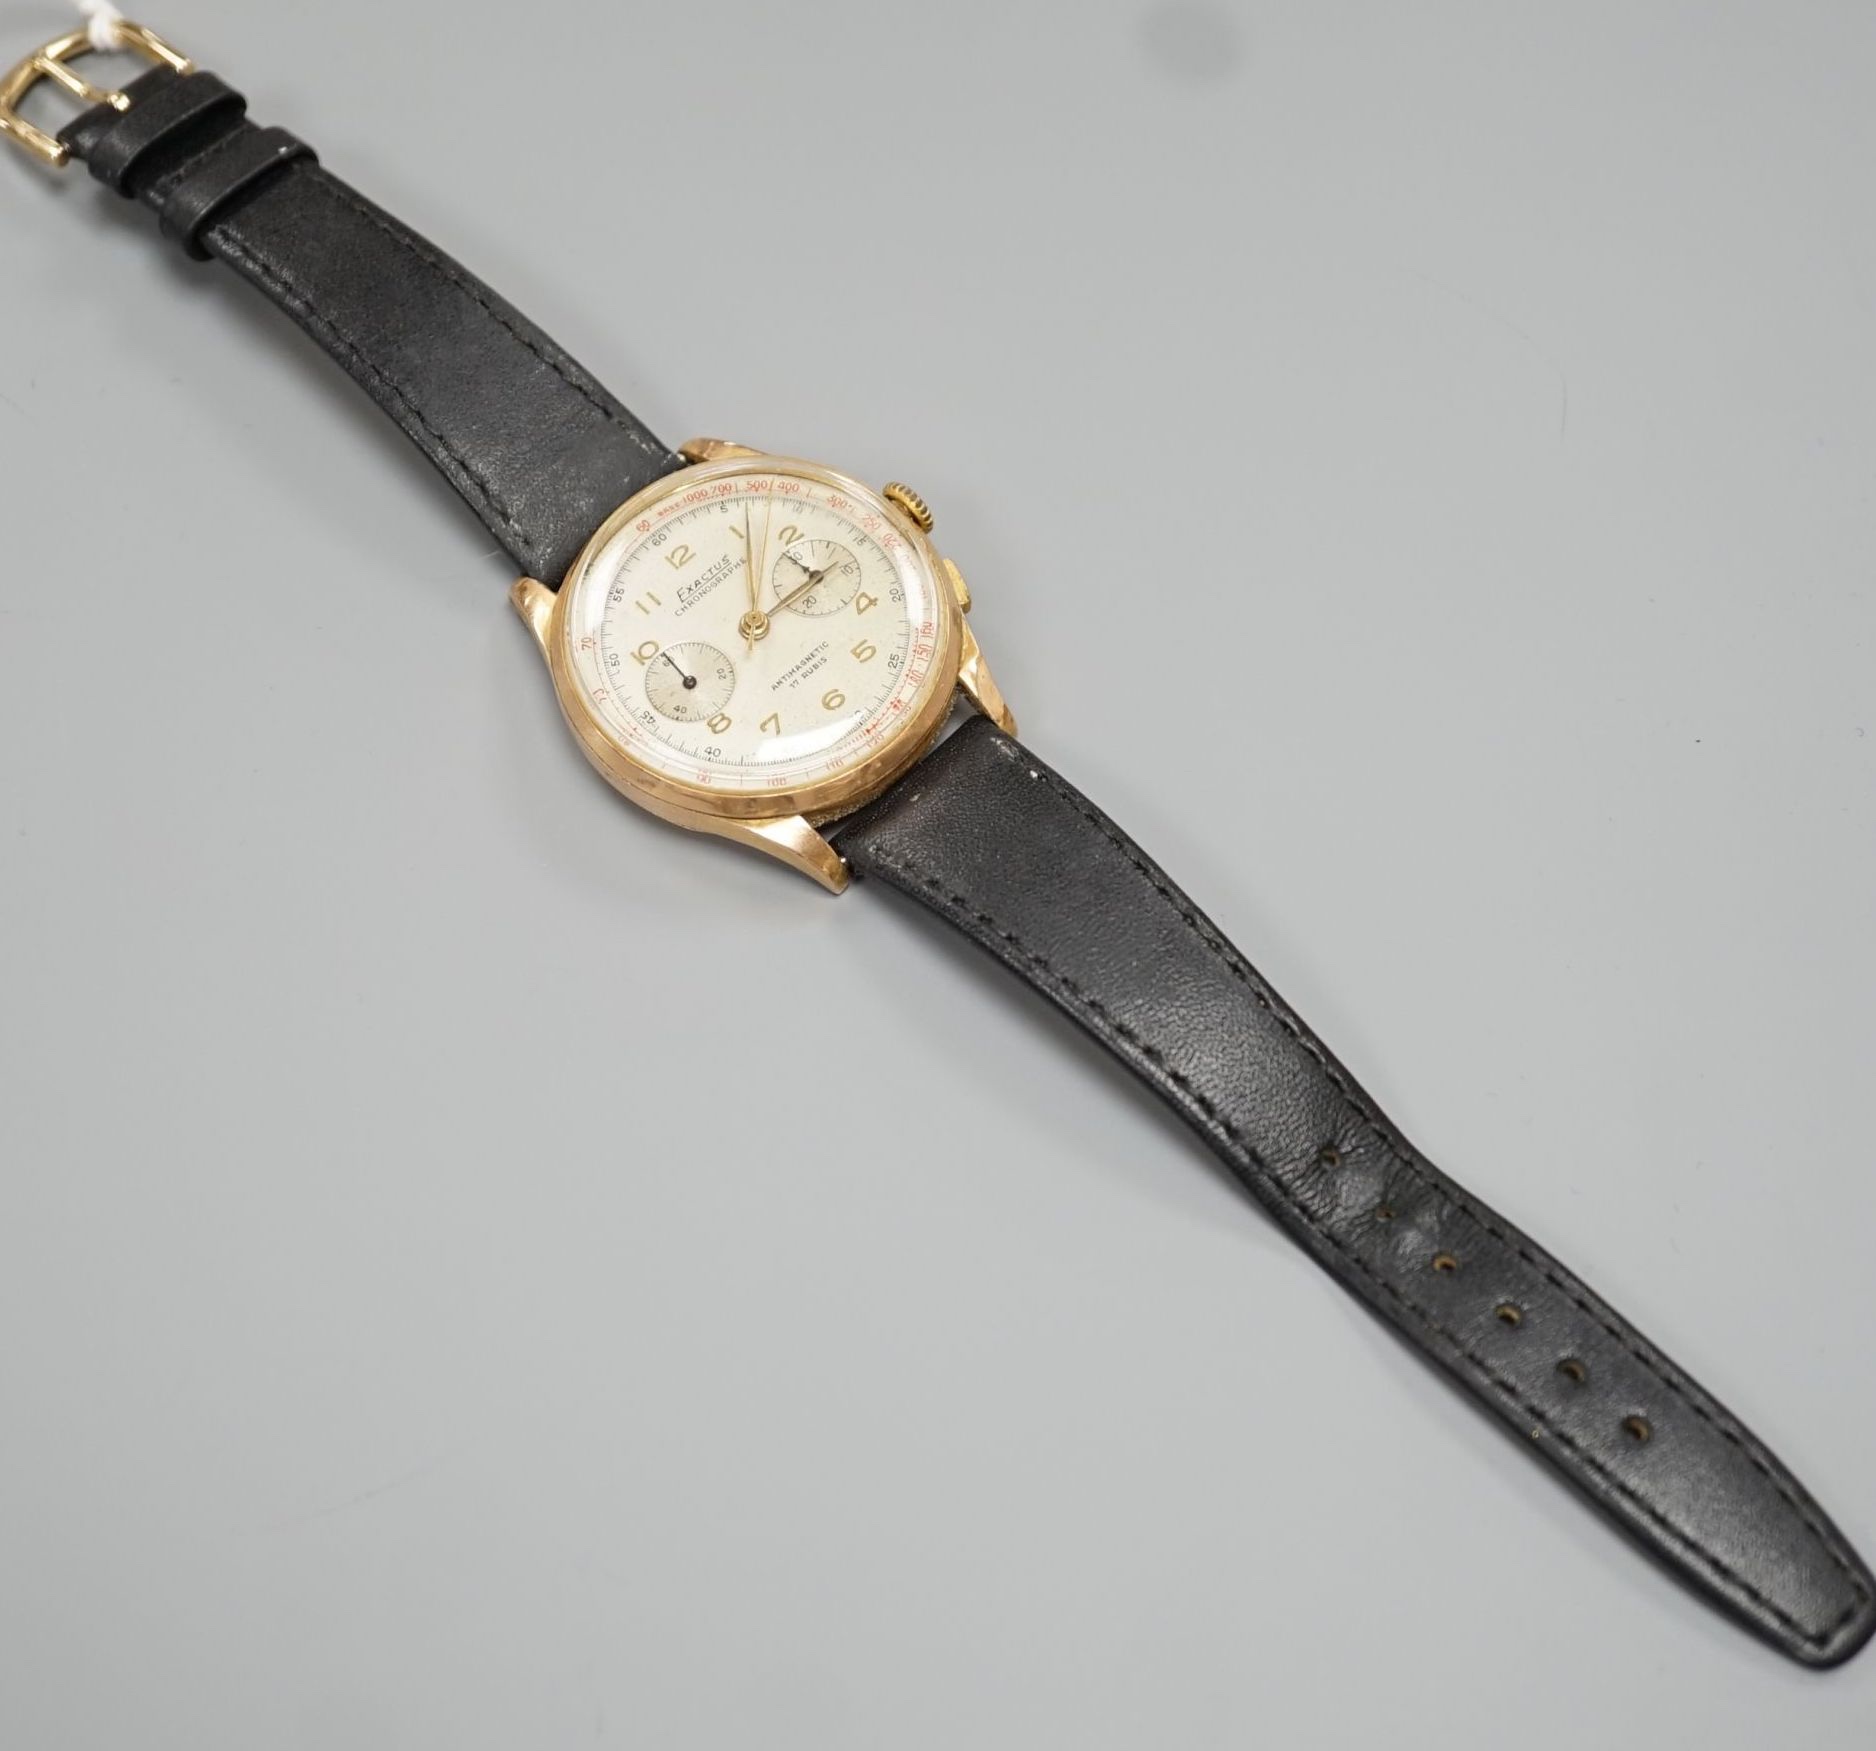 A gentleman's 1950's? 18k yellow metal Exactus manual wind chronographe wrist watch, on a black leather strap, case diameter 37mm